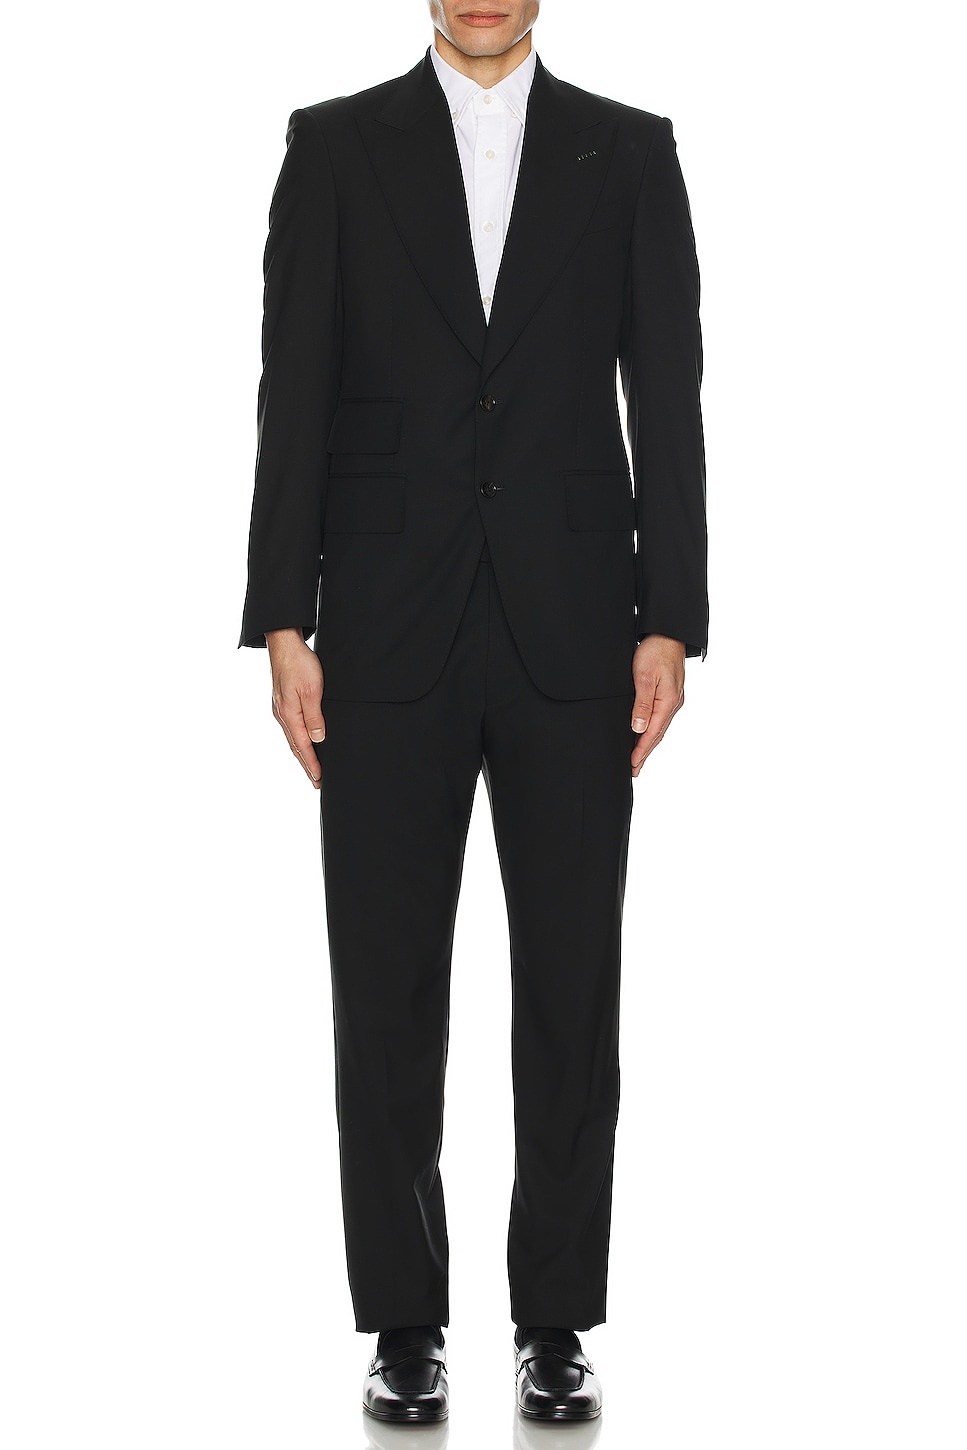 Atticus Plain Weave Suit - 5